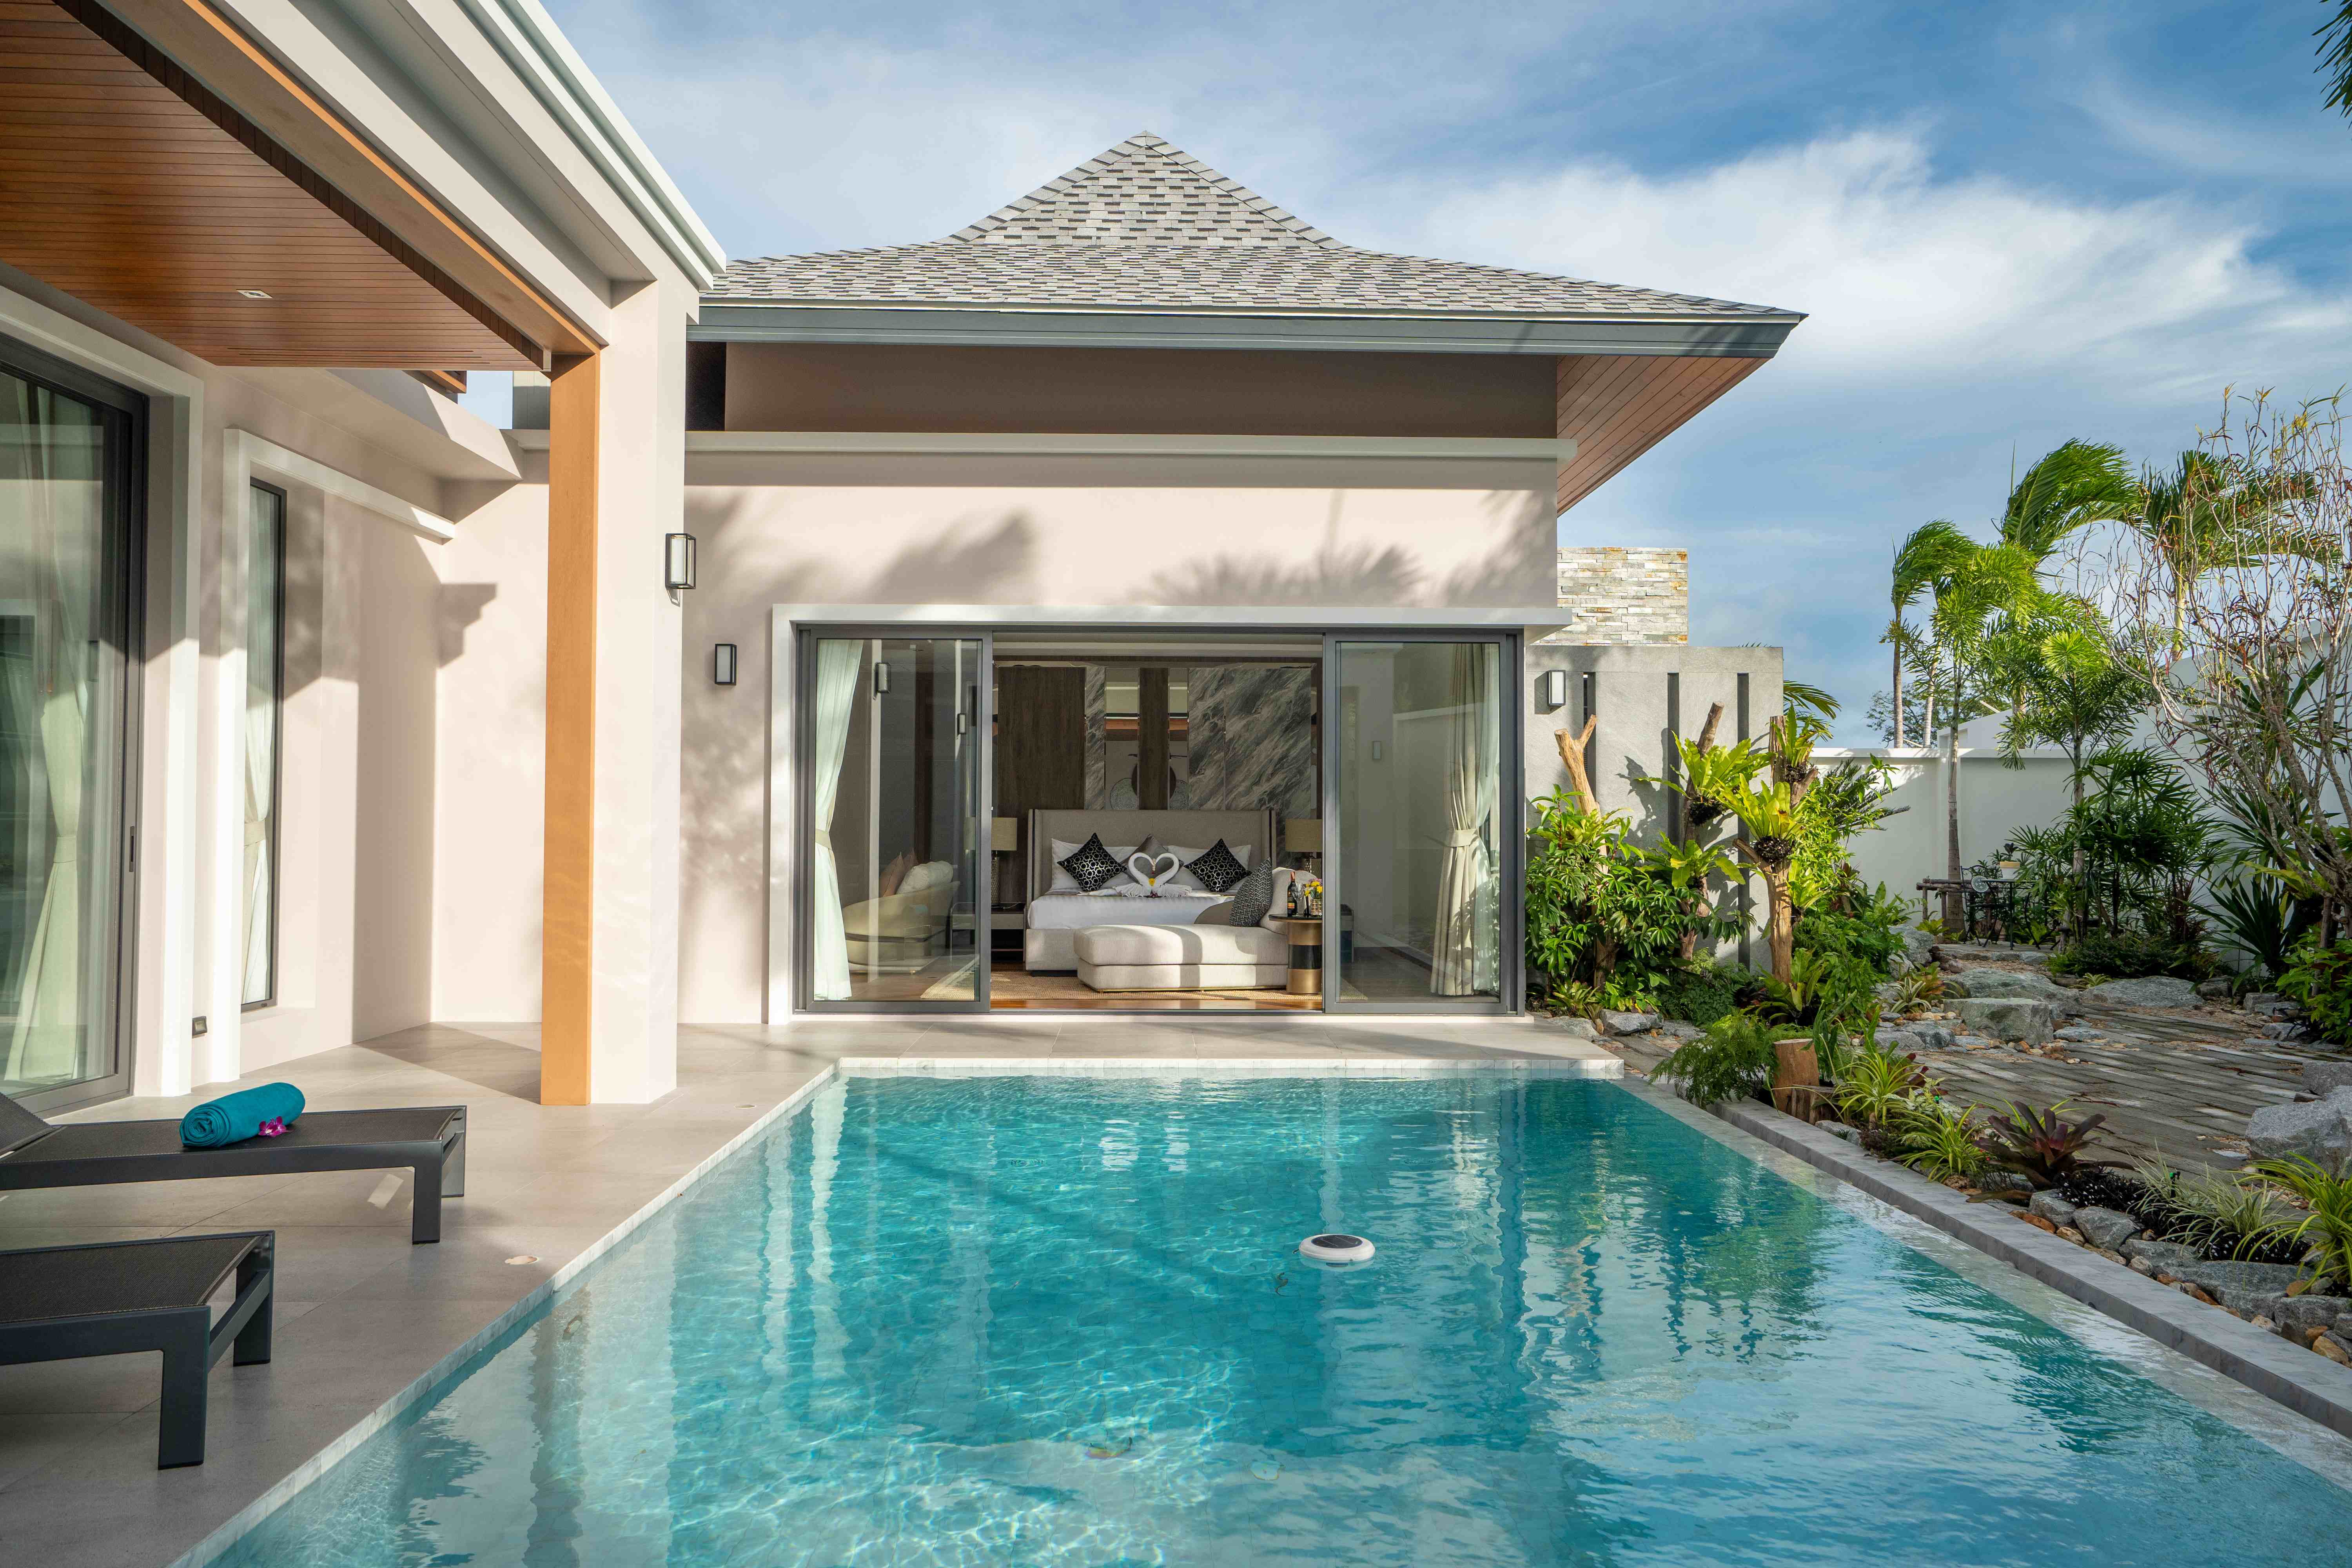 3 Bedroom Modern contemporary pool villa